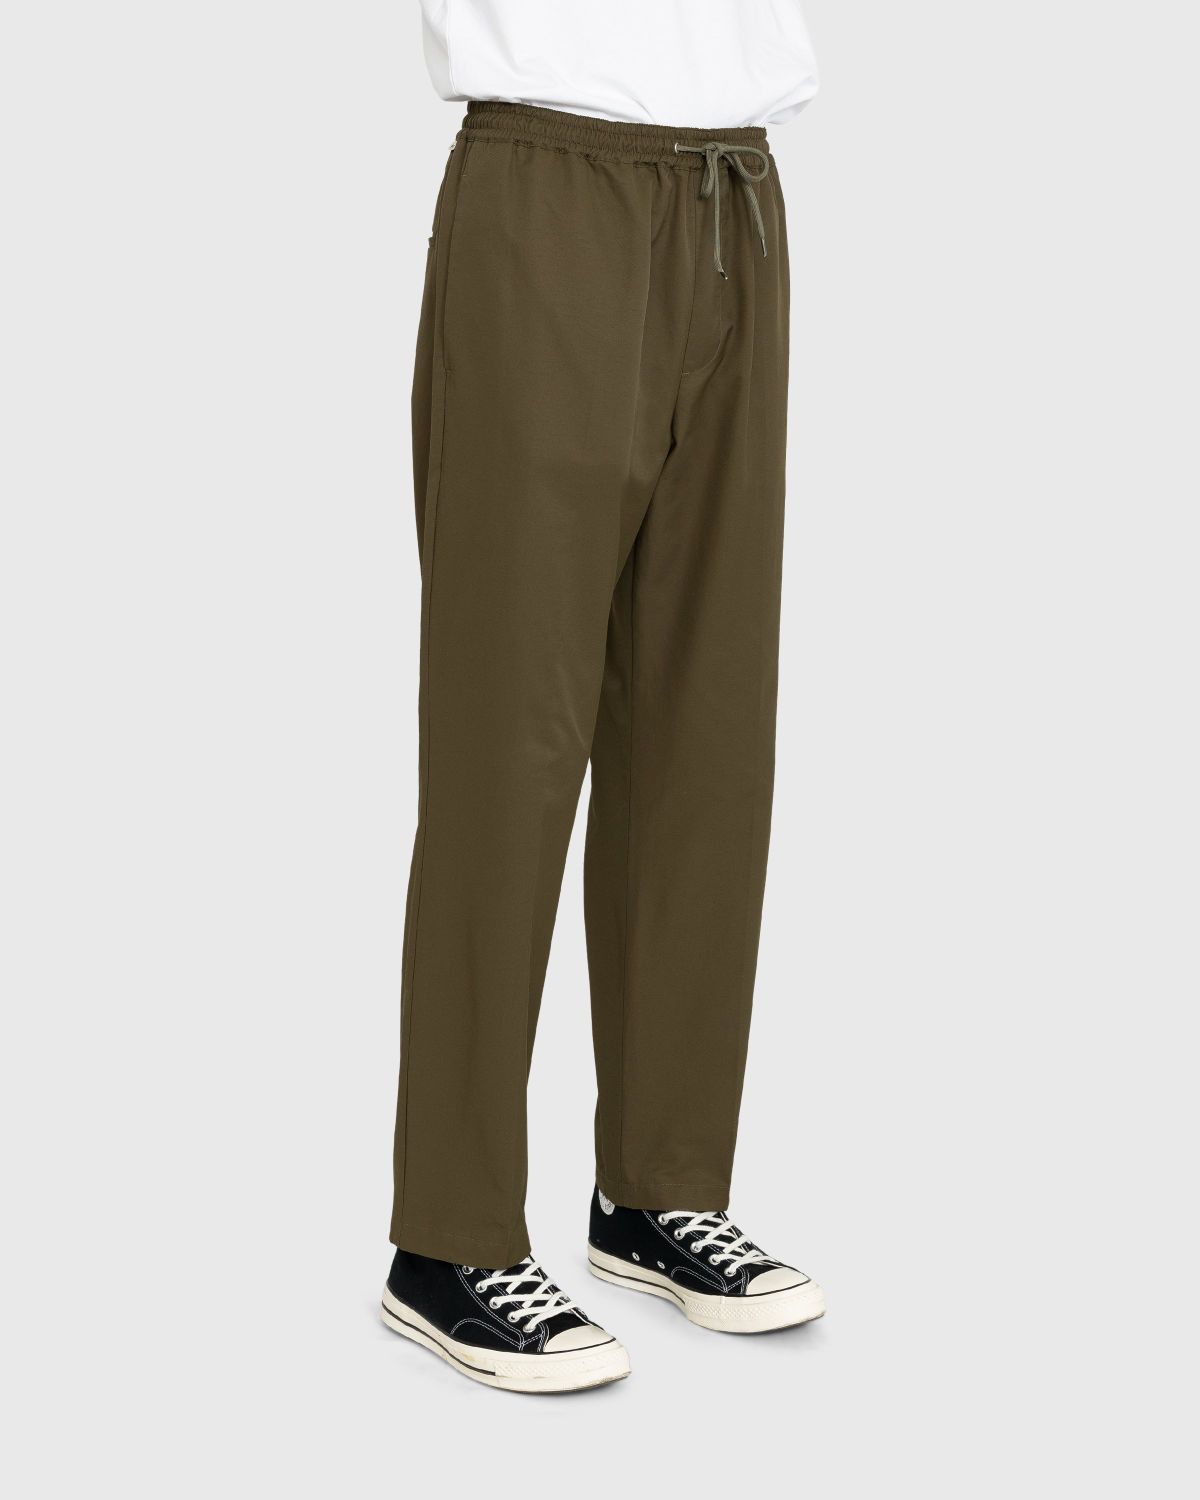 Highsnobiety – Cotton Nylon Elastic Pants Olive - Pants - Green - Image 2